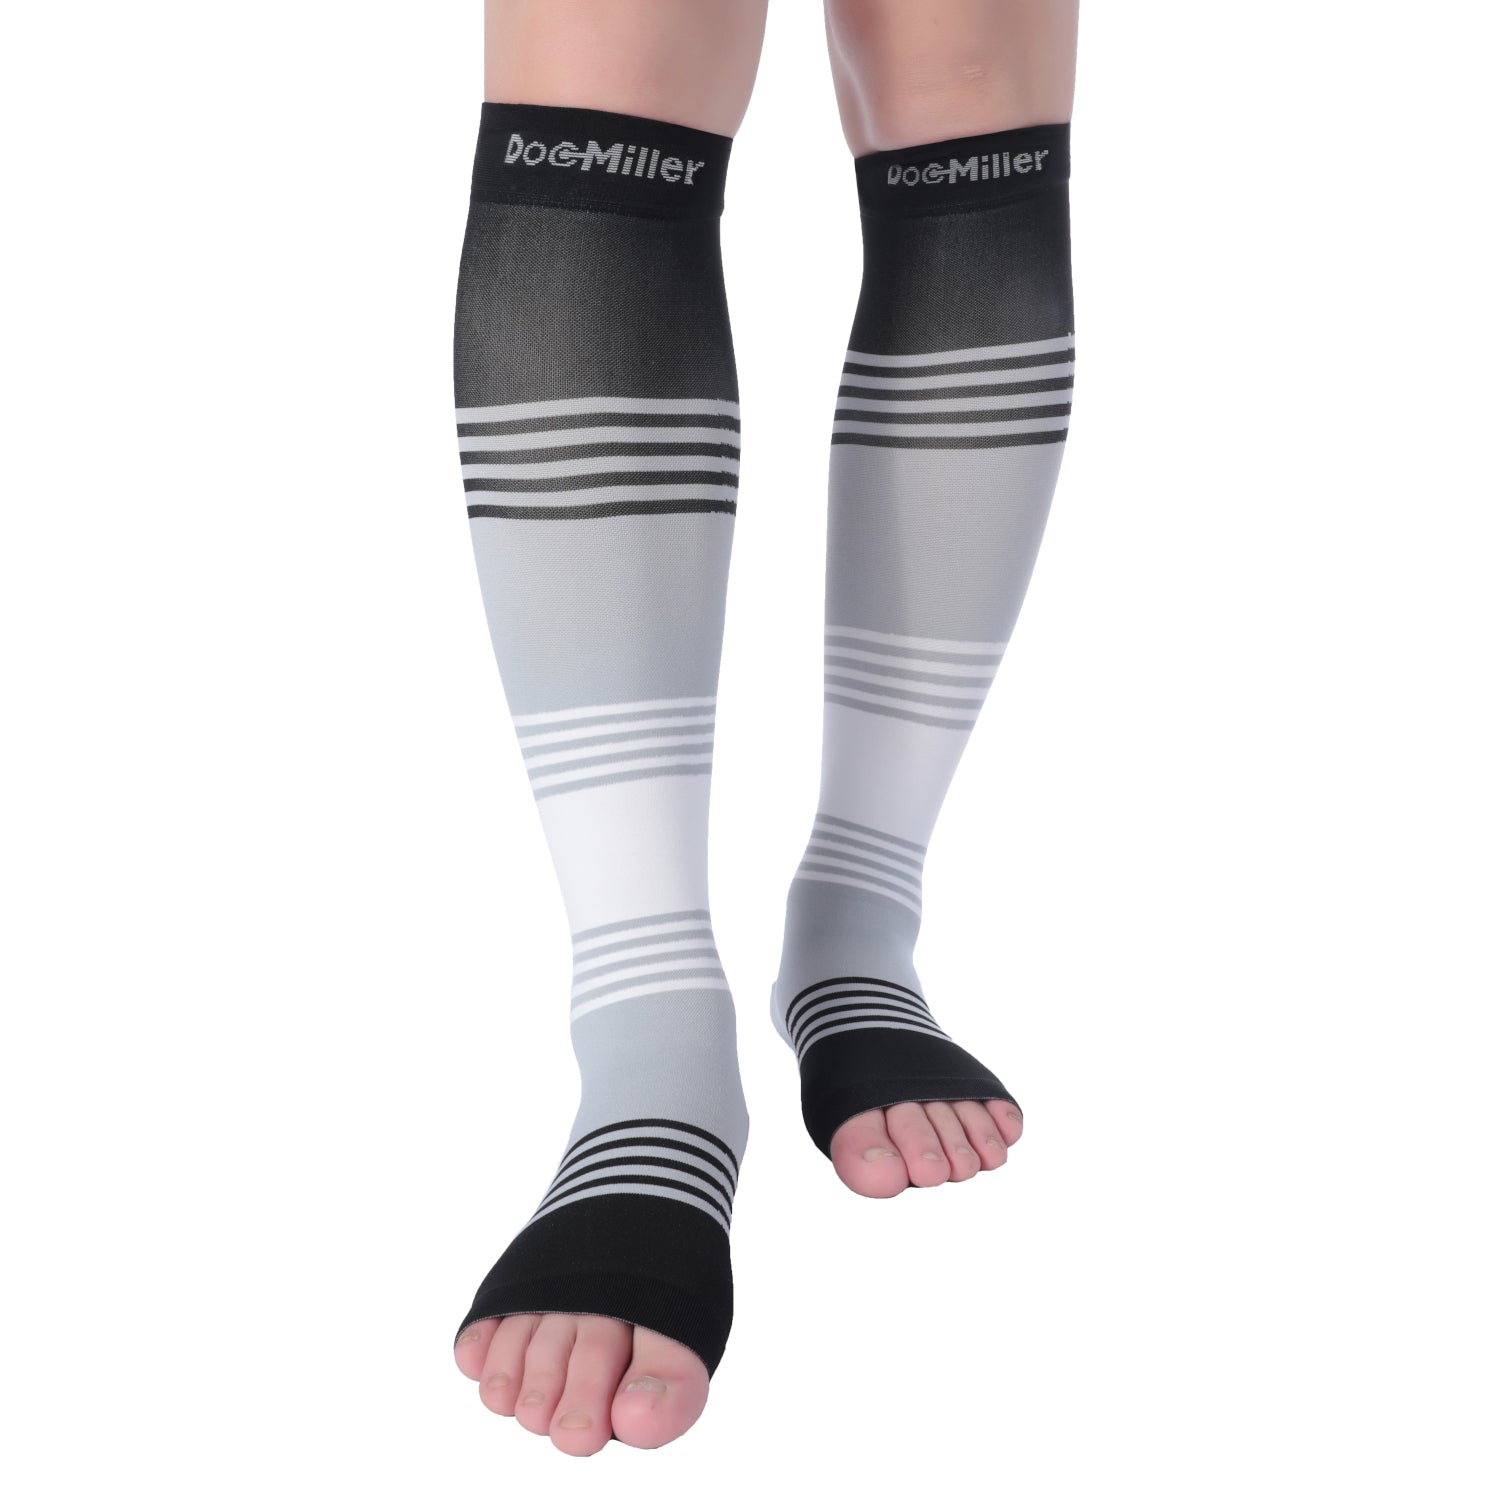 Open Toe Compression Socks 20-30 mmHg BLACK/GRAY/WHITE by Doc Miller